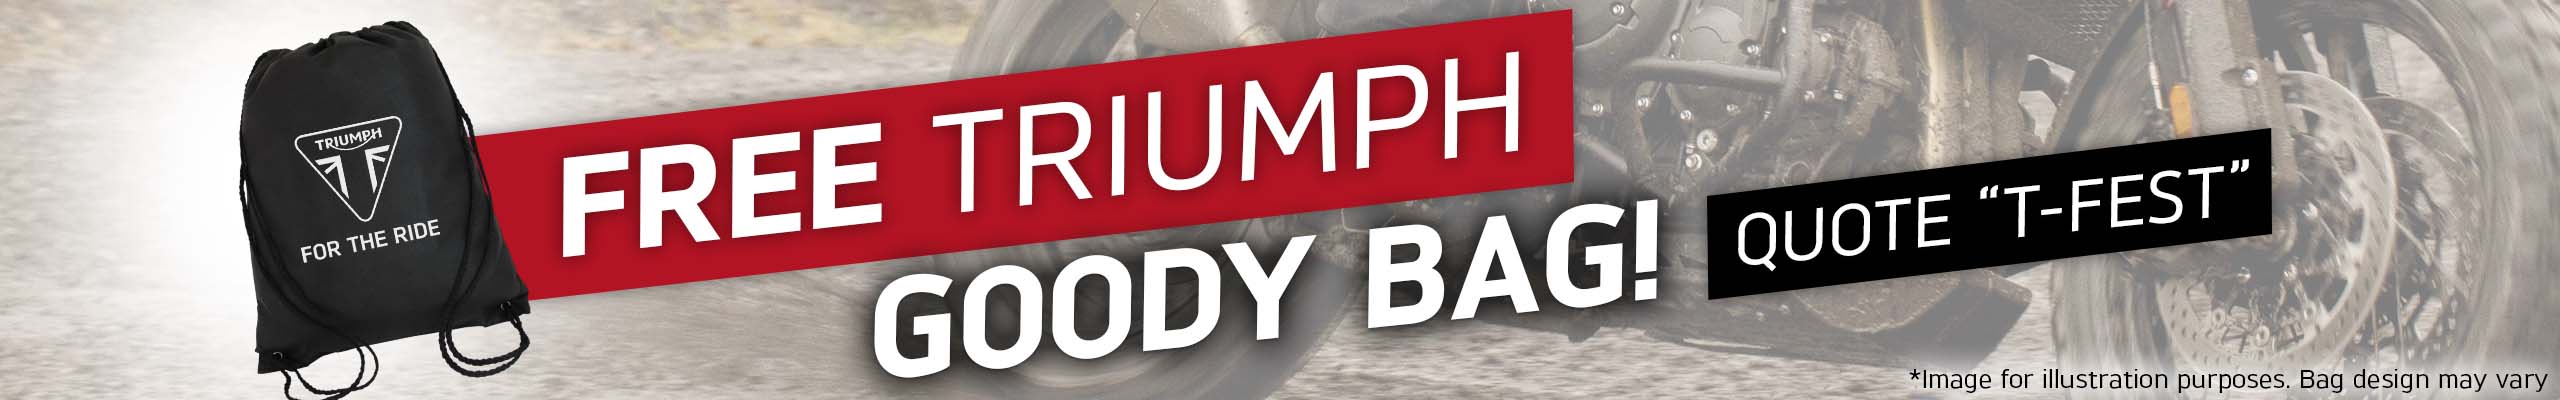 Laguna Triumph 2021 T-Fest Roadster Week - Goody Bag